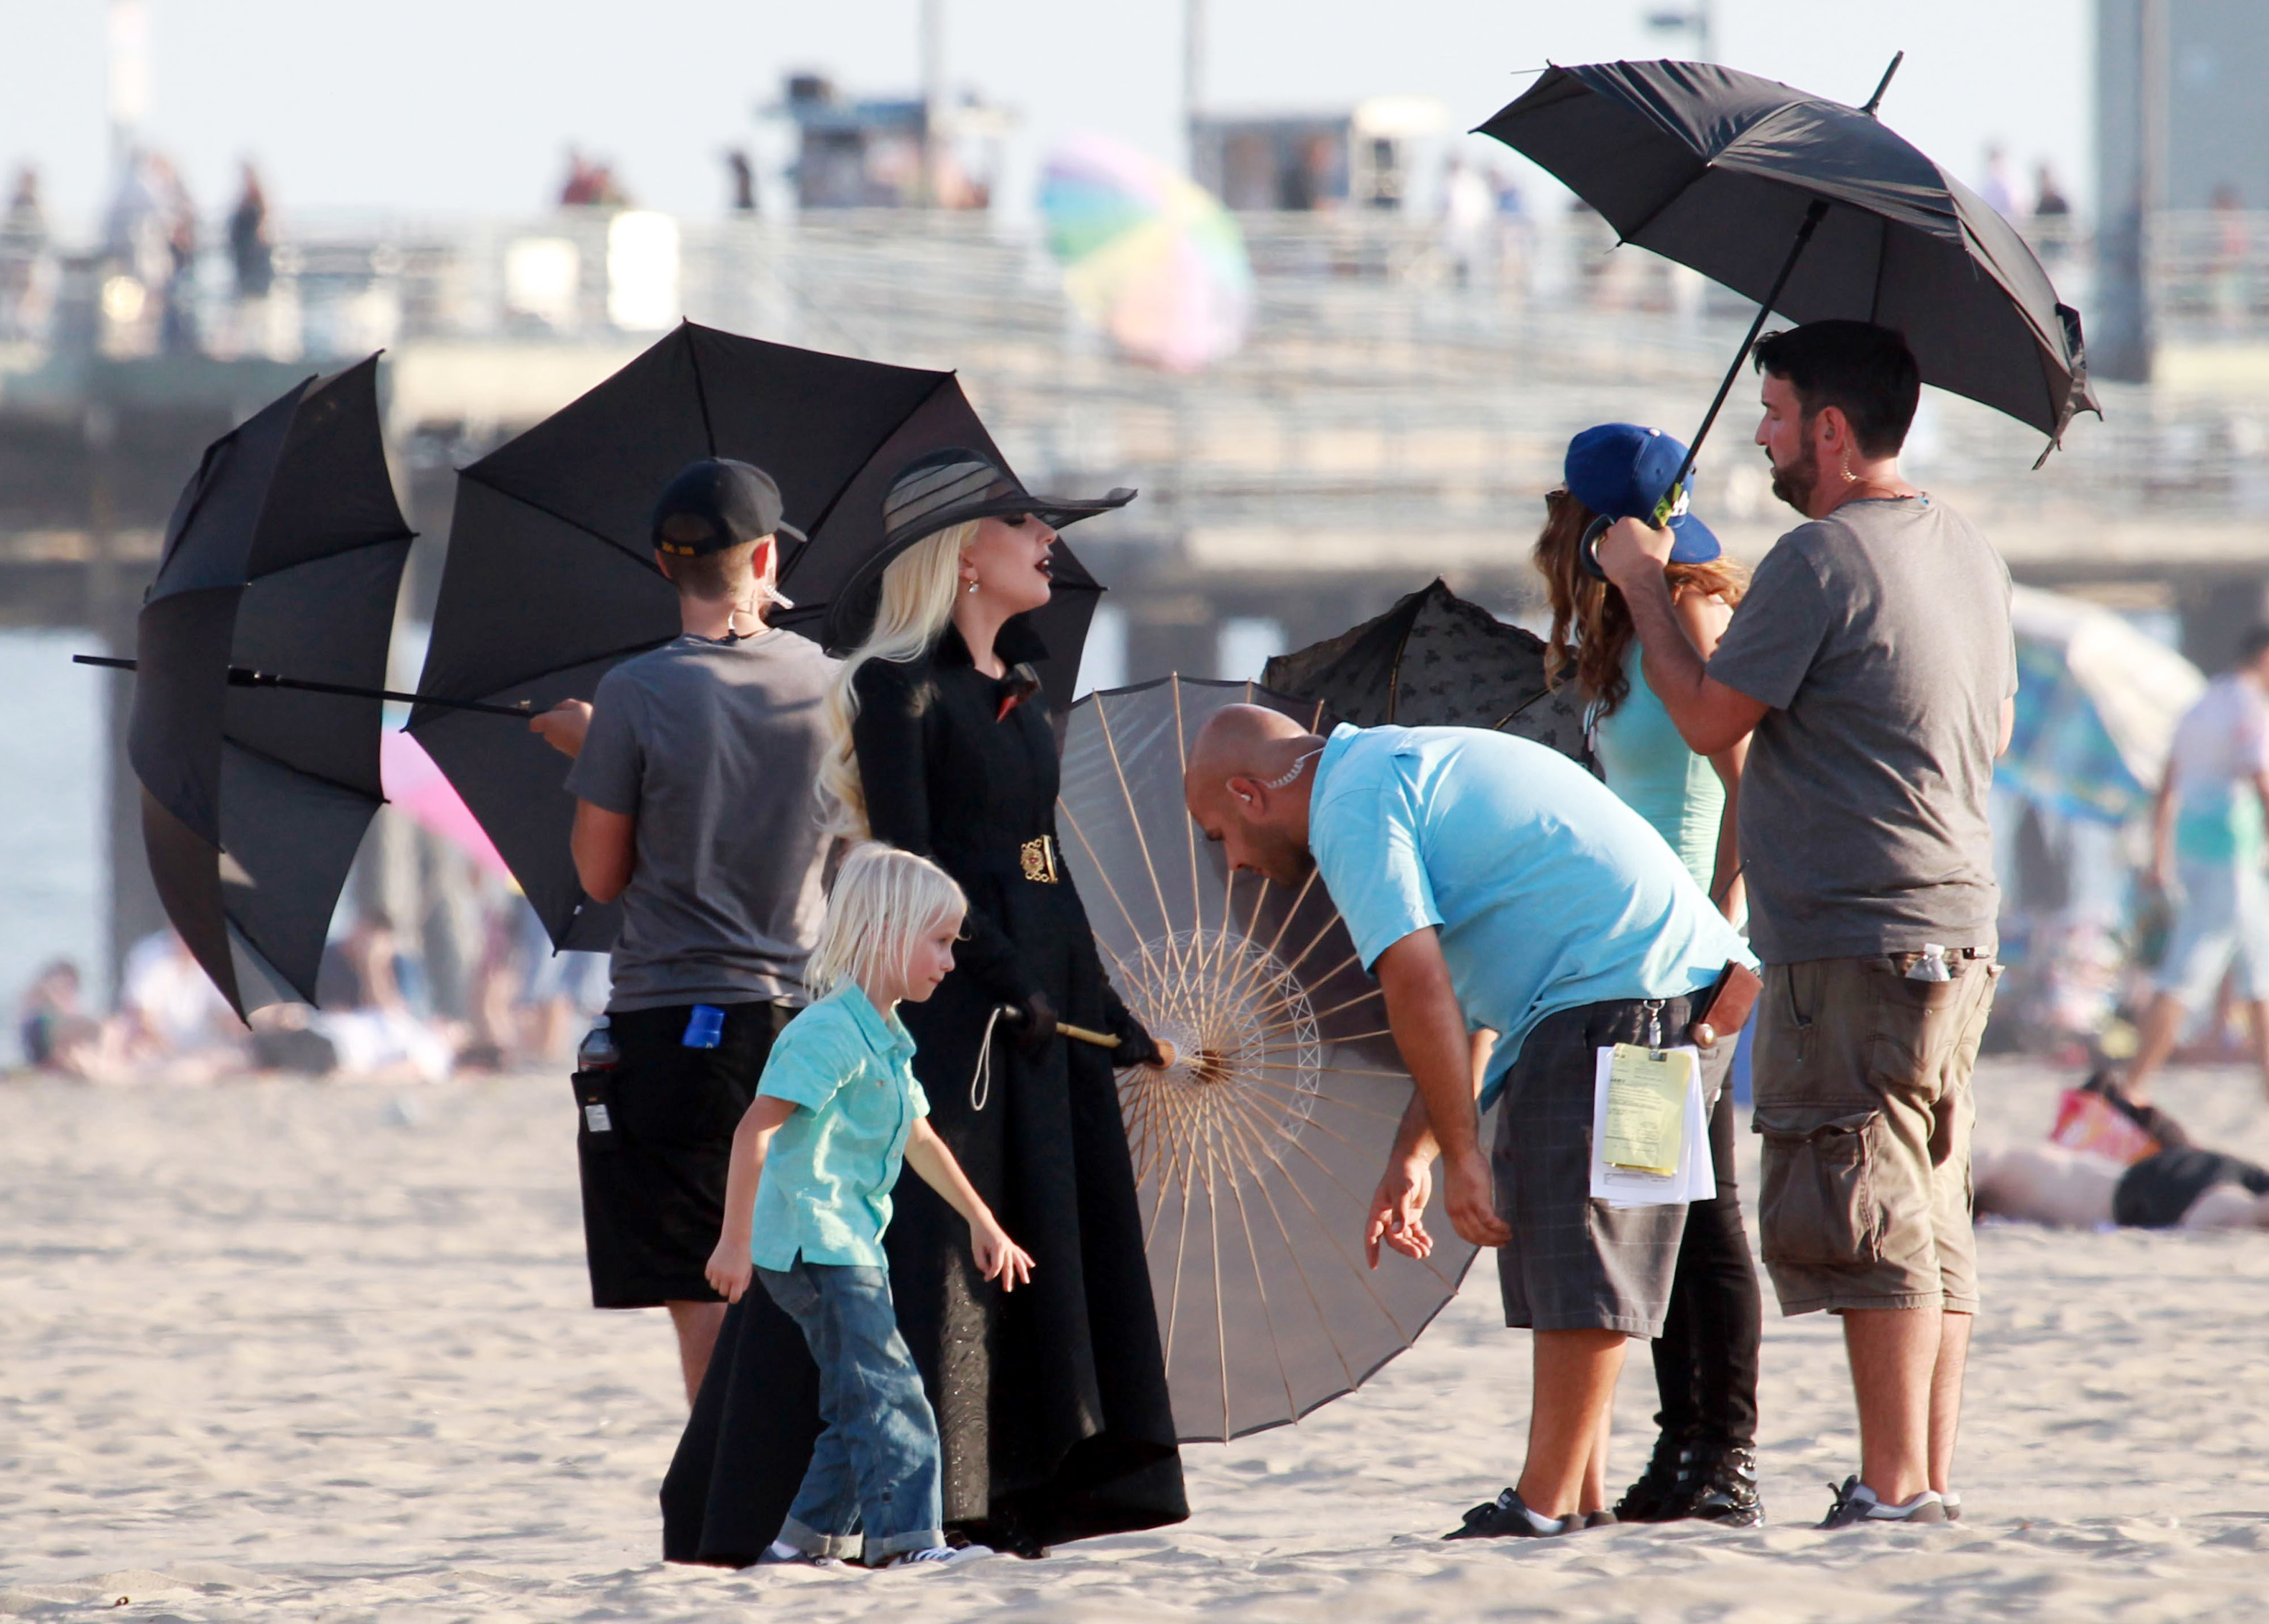 AHS:Hotel filming Santa Monica pier